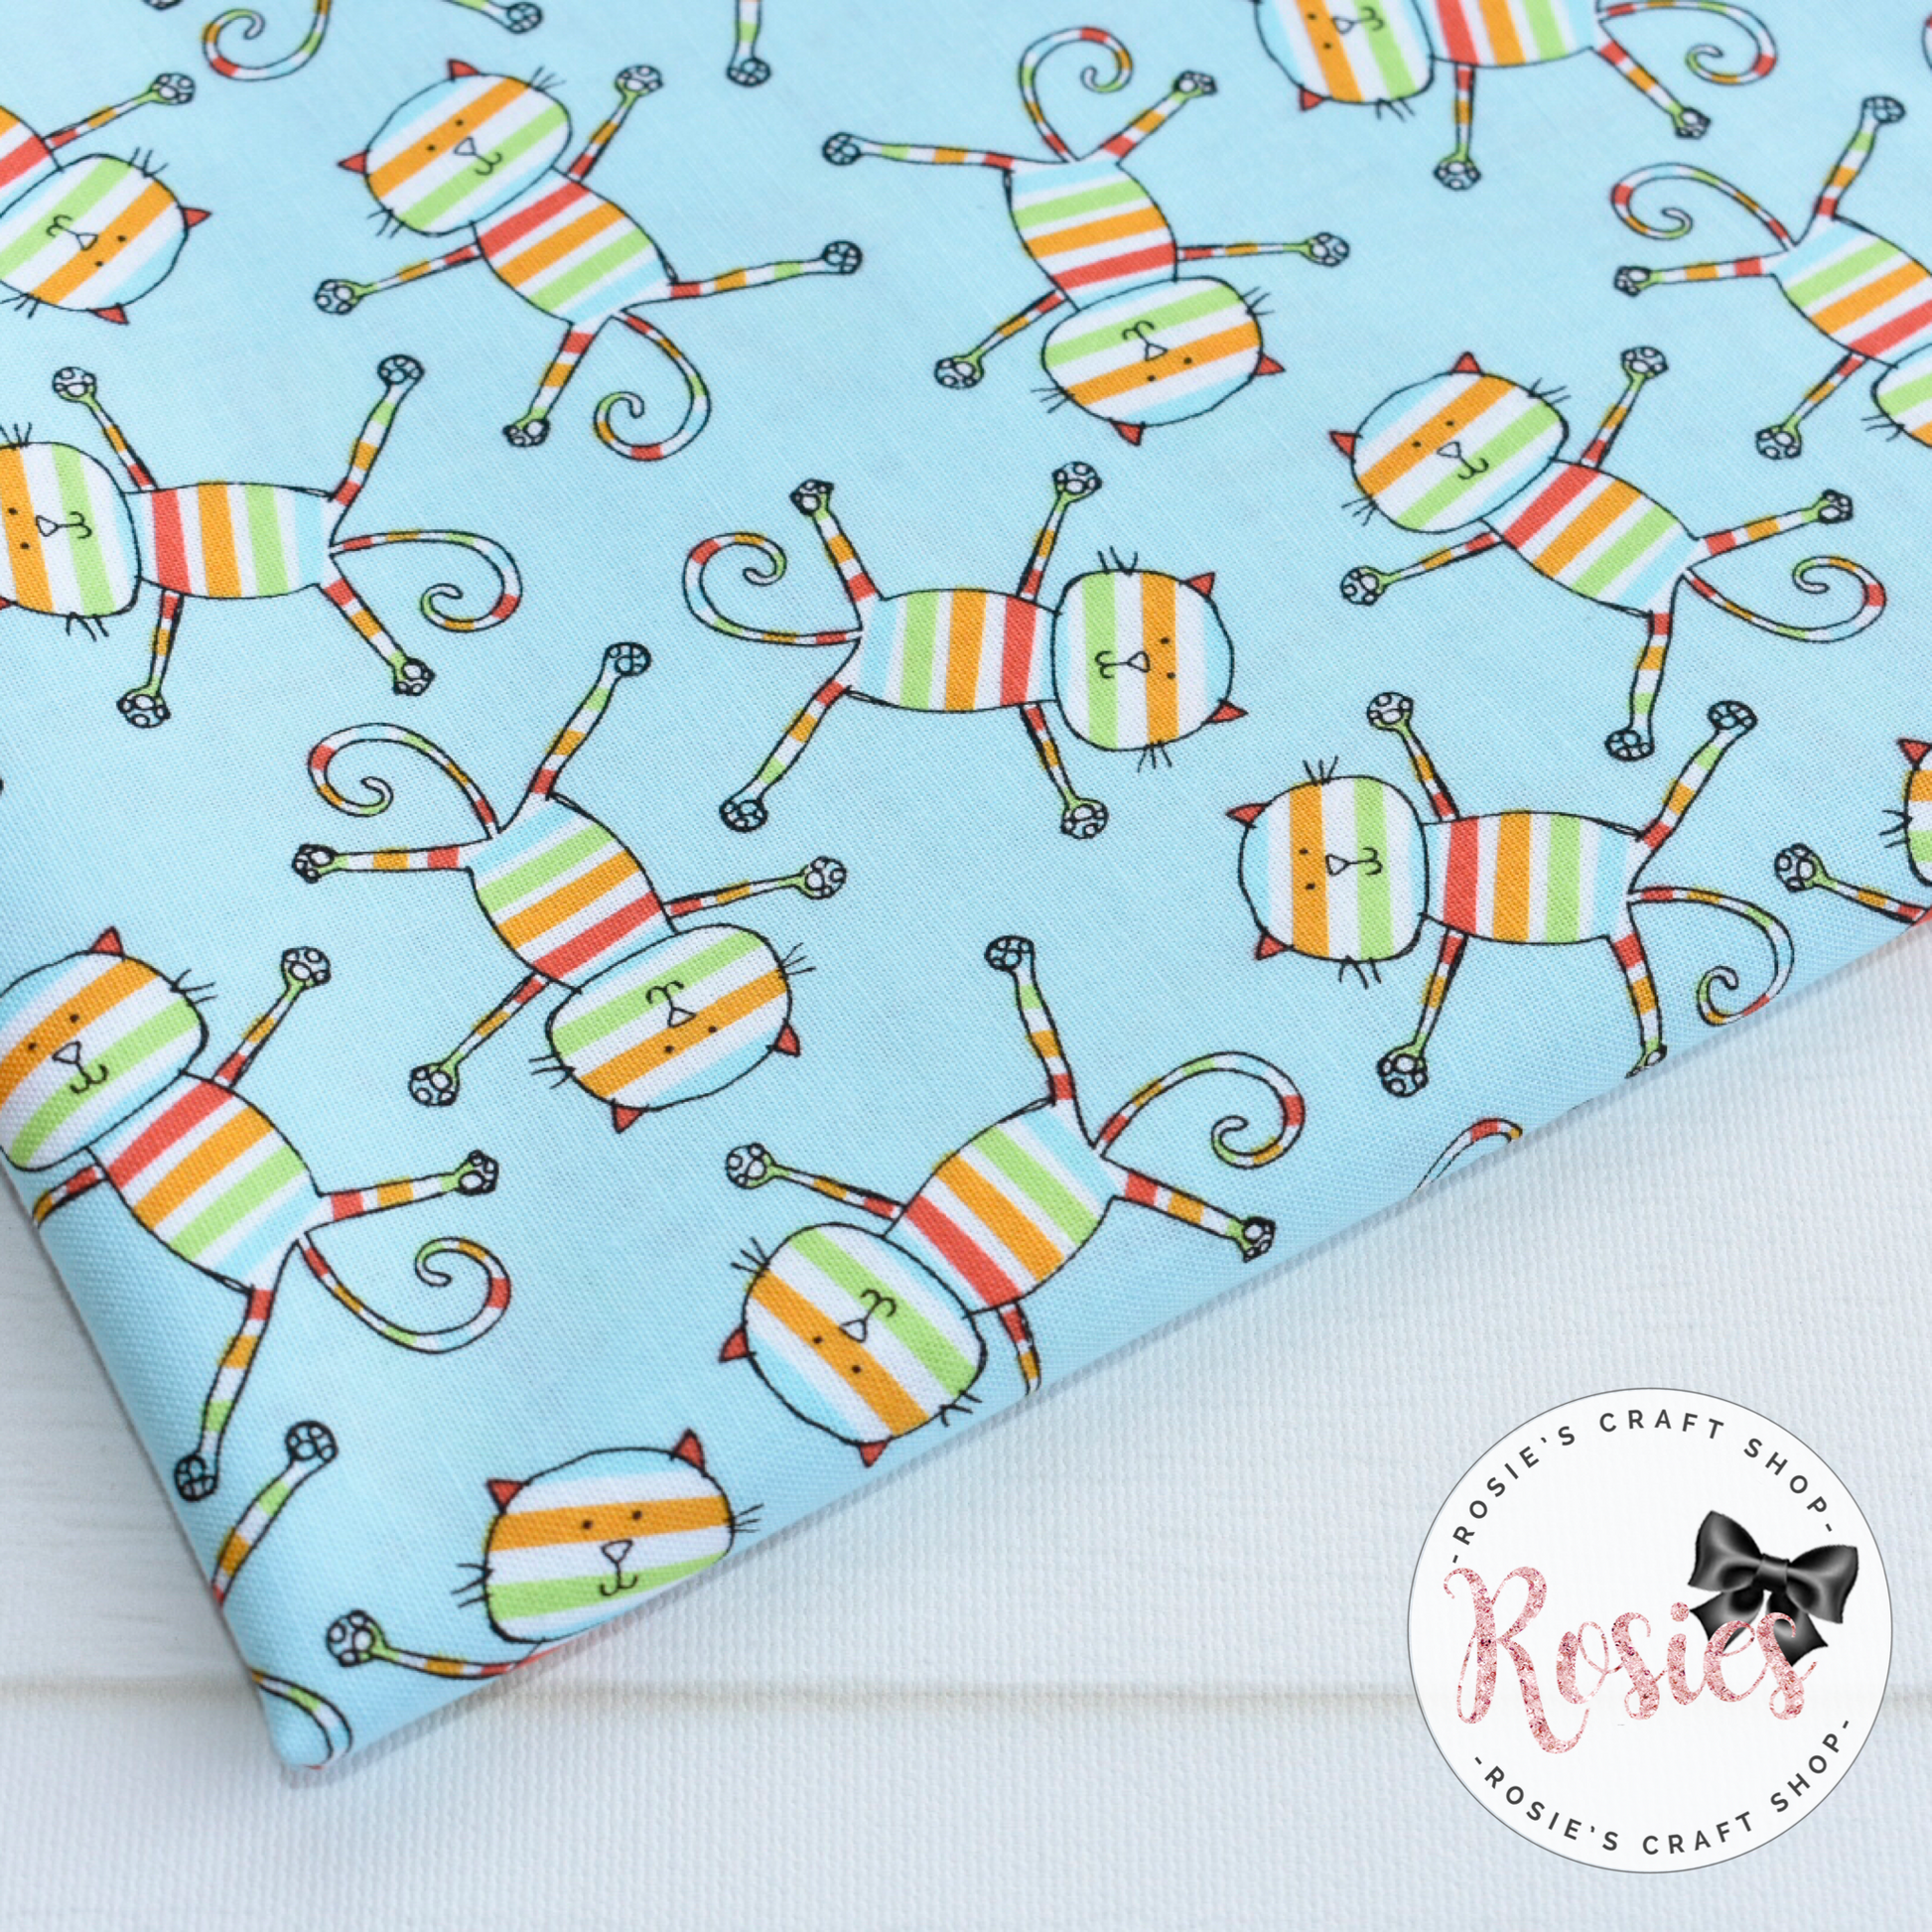 Rainbow Cats Designer Fabric Felt - Rosie's Craft Shop Ltd